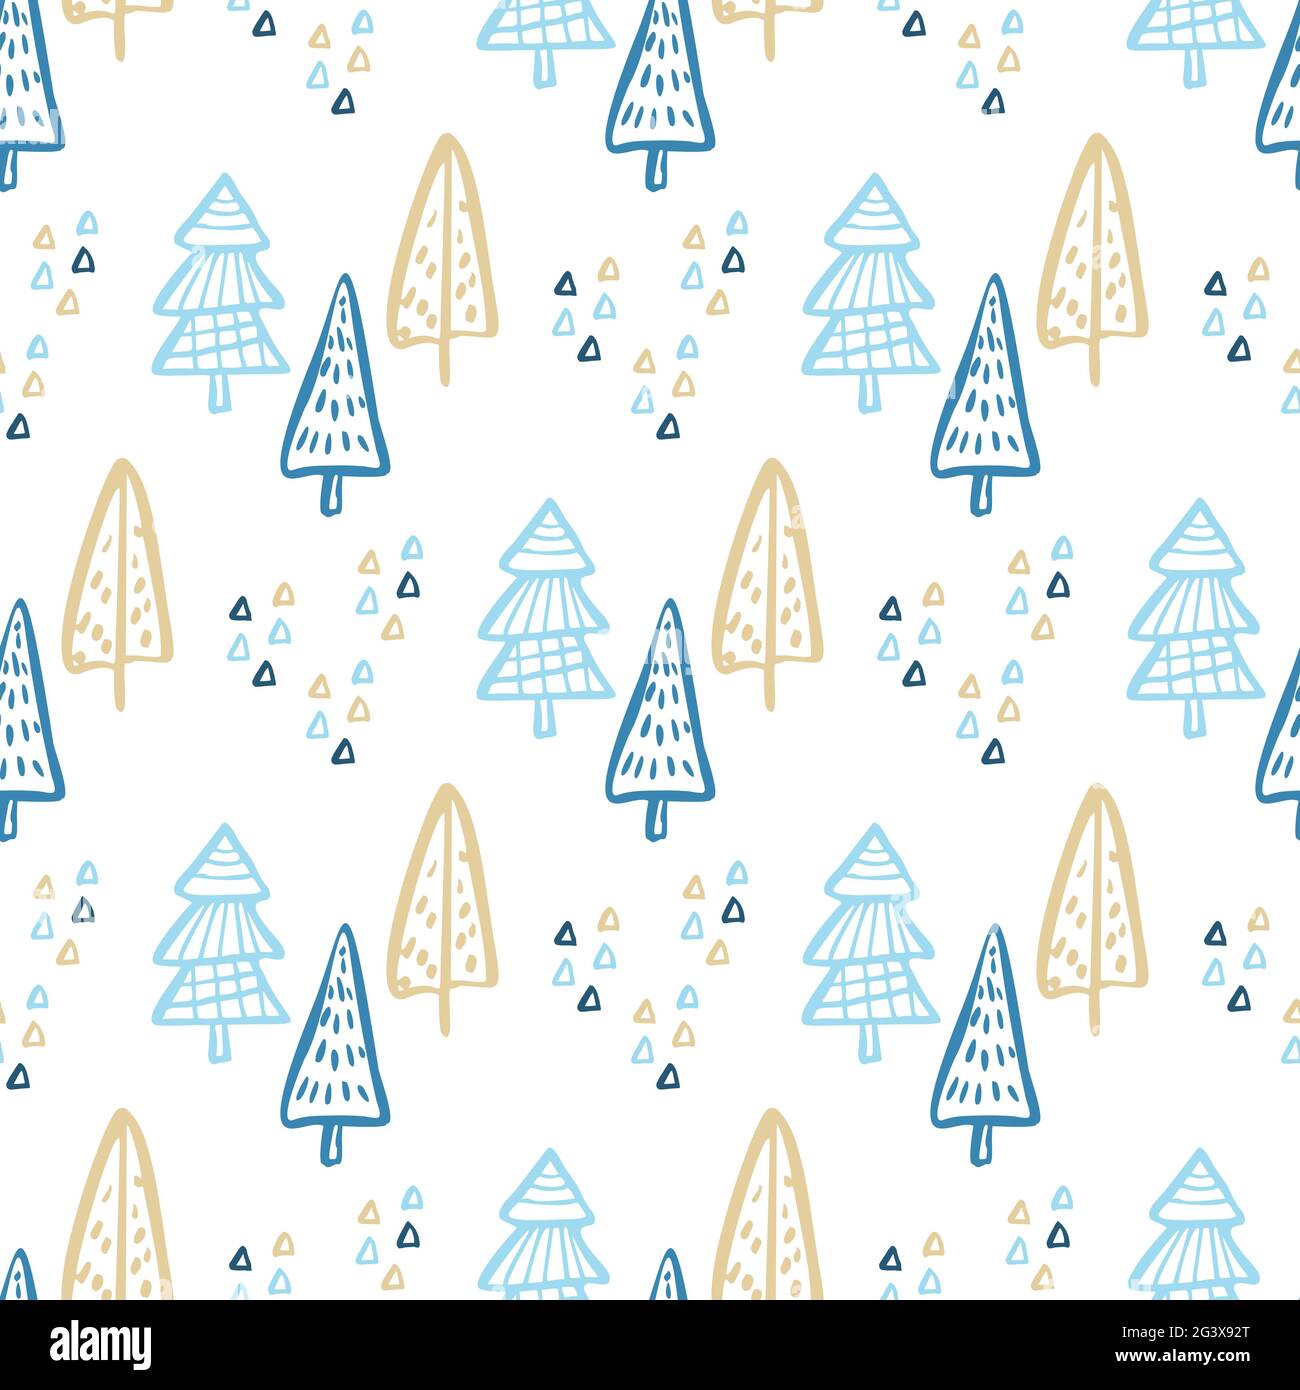 Christmas Tree Doodle Seamless Pattern. Winter Stylized Simple Fir